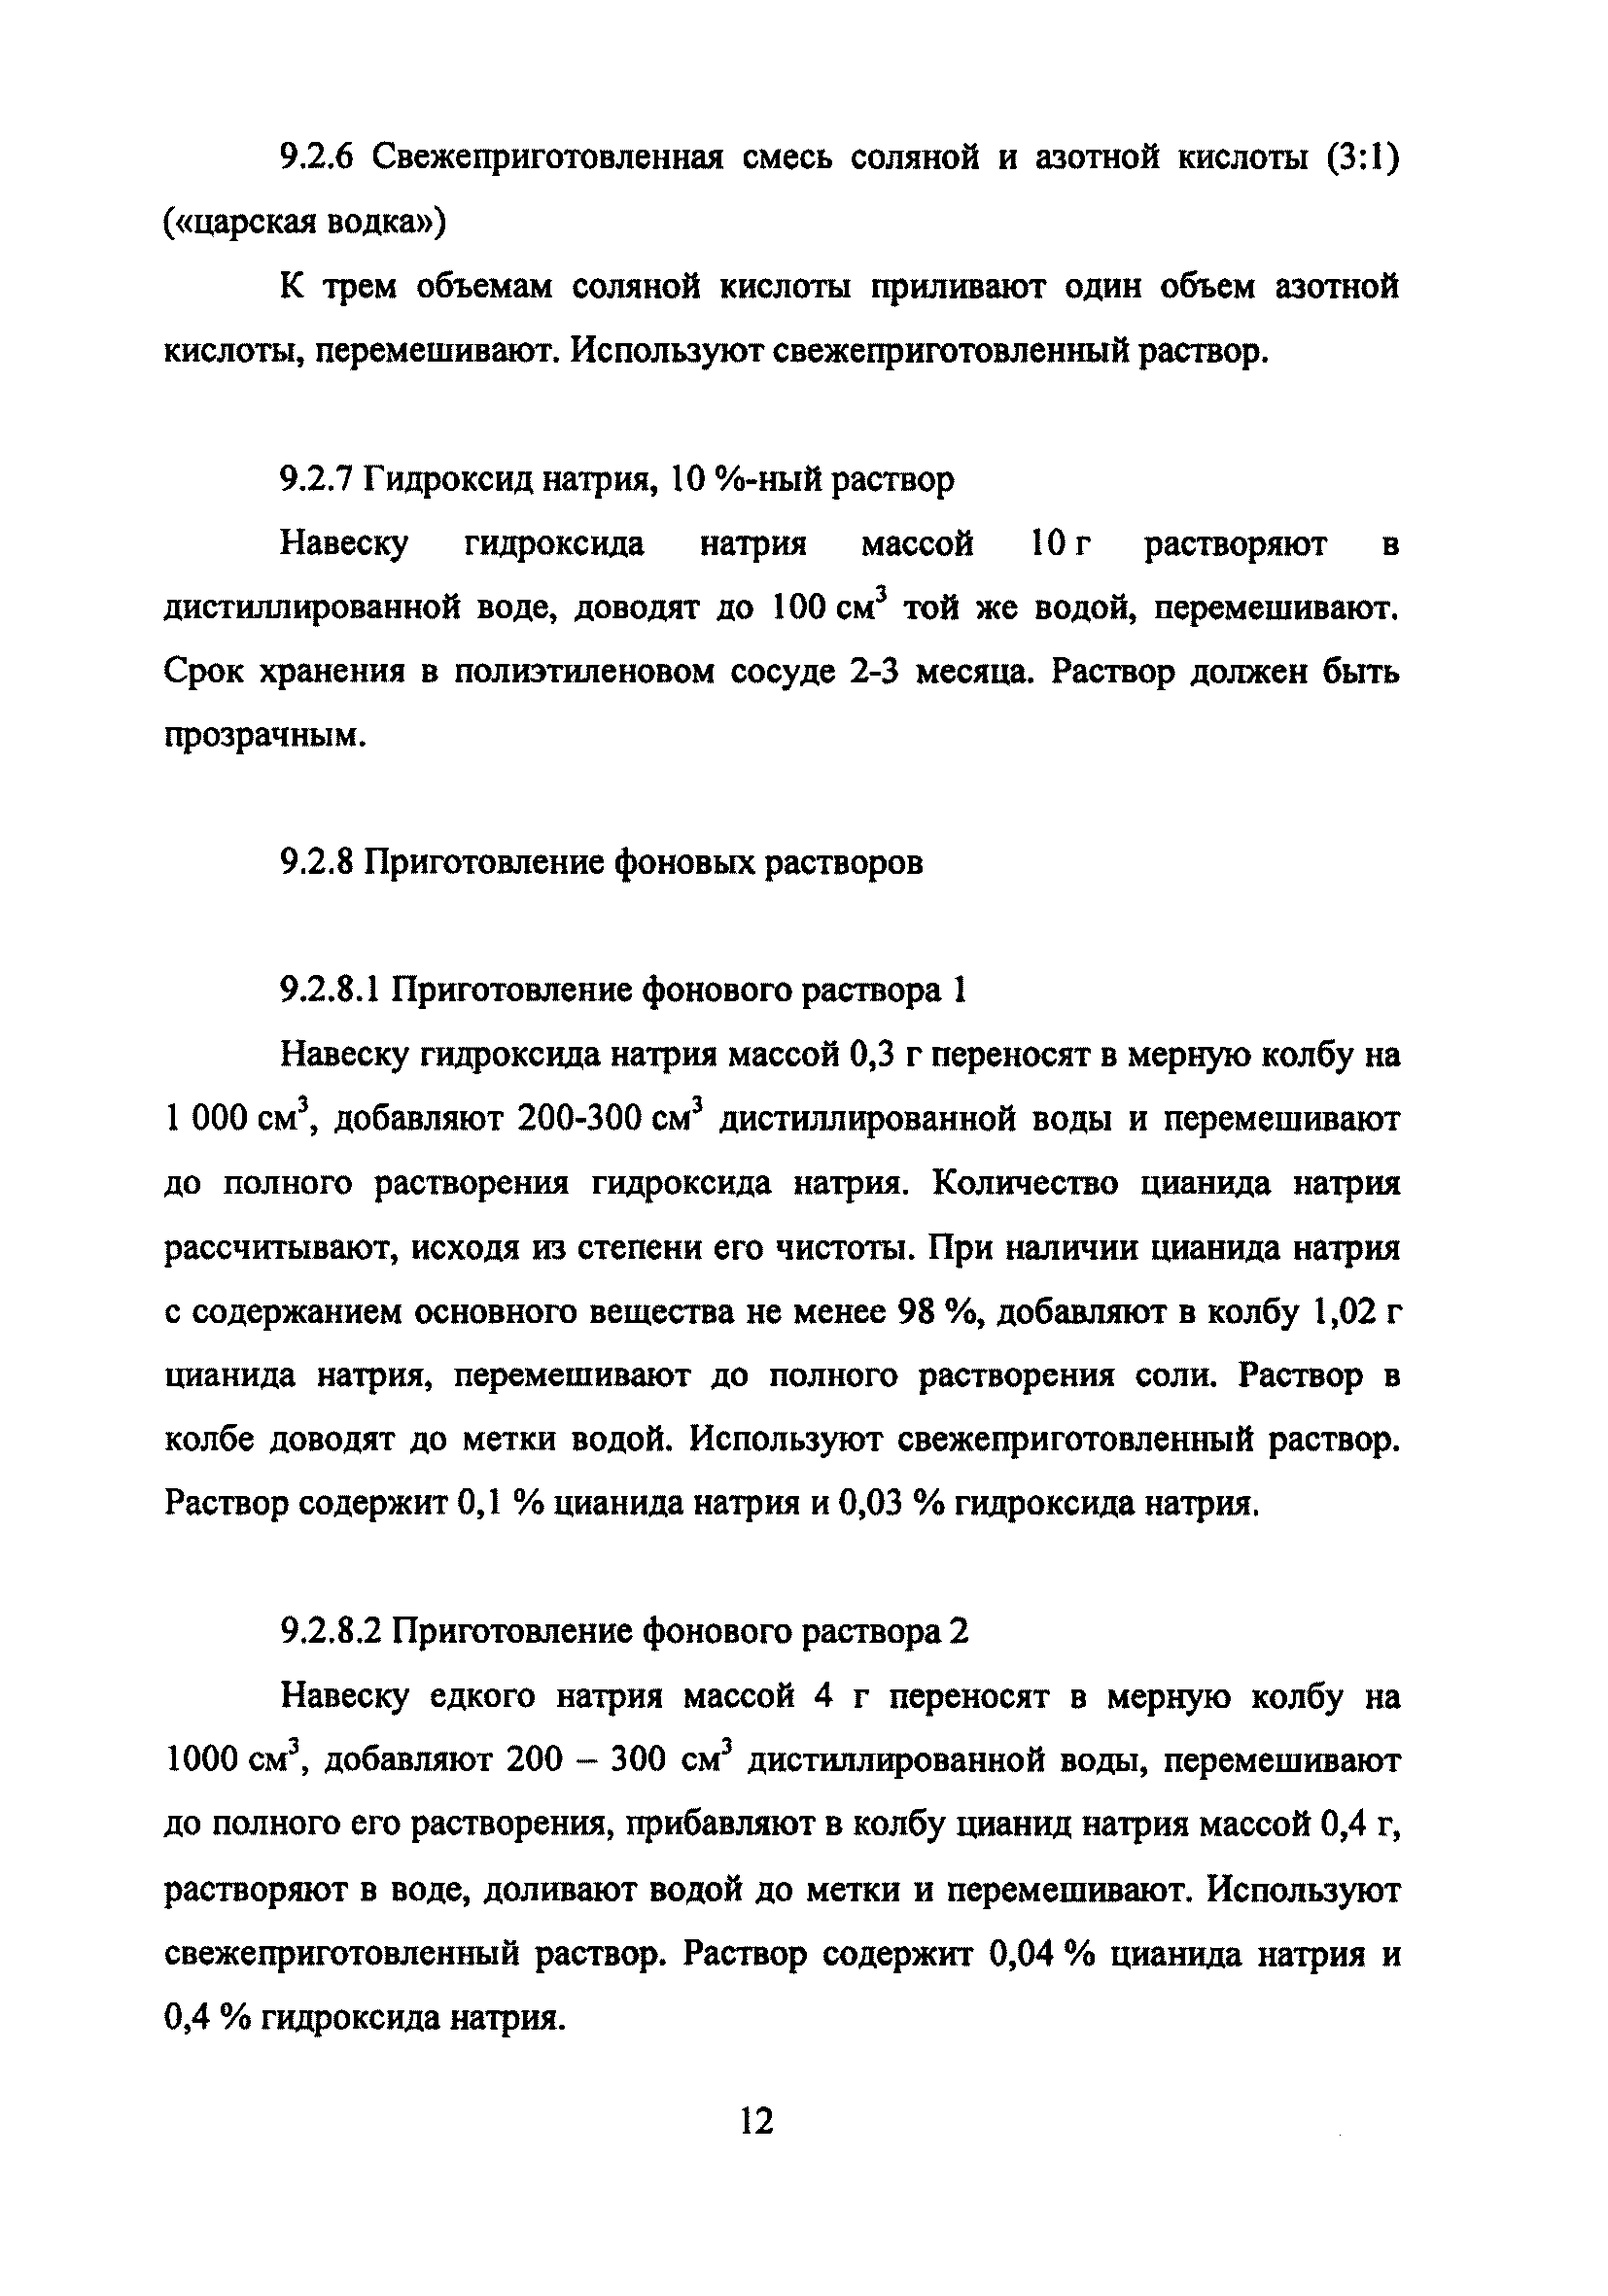 Методика НСАМ 108-Х